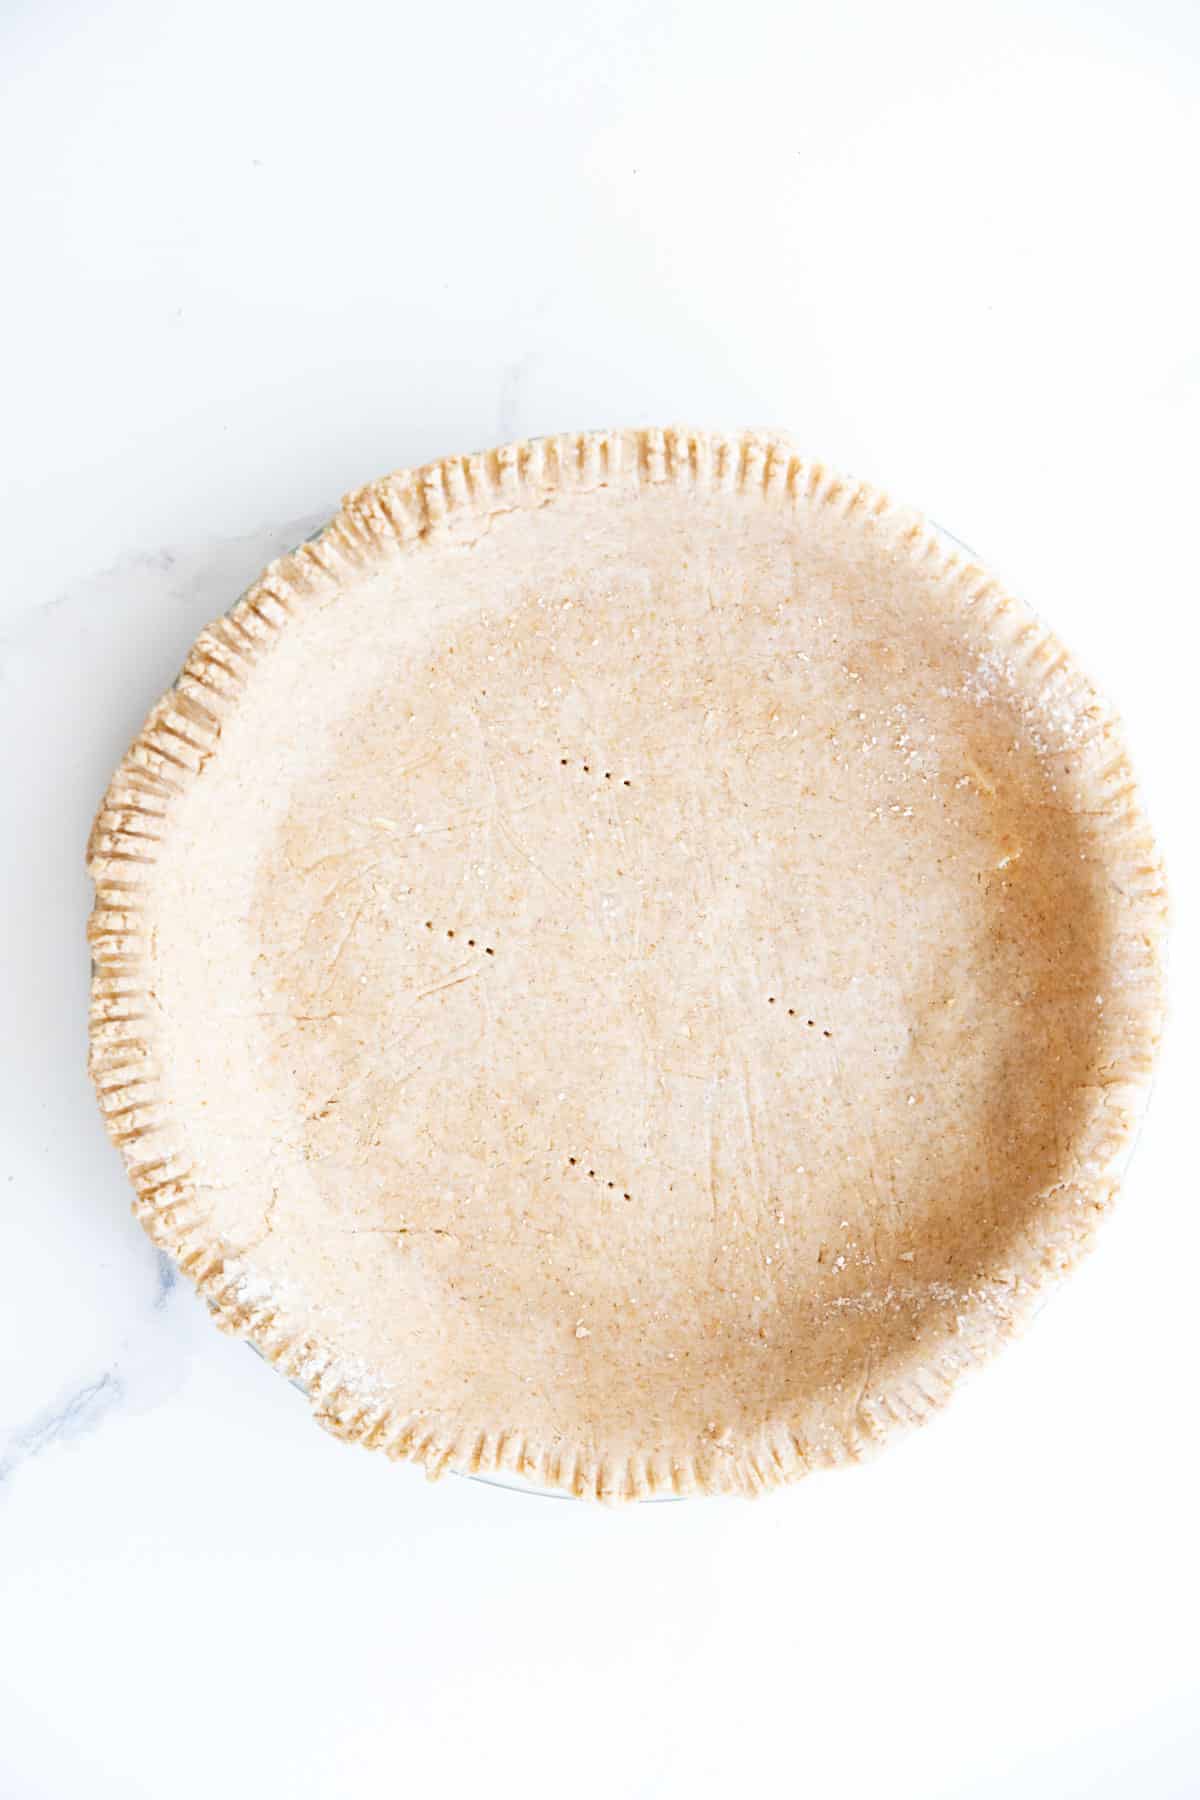 Oat Flour Pie Crust Recipe 